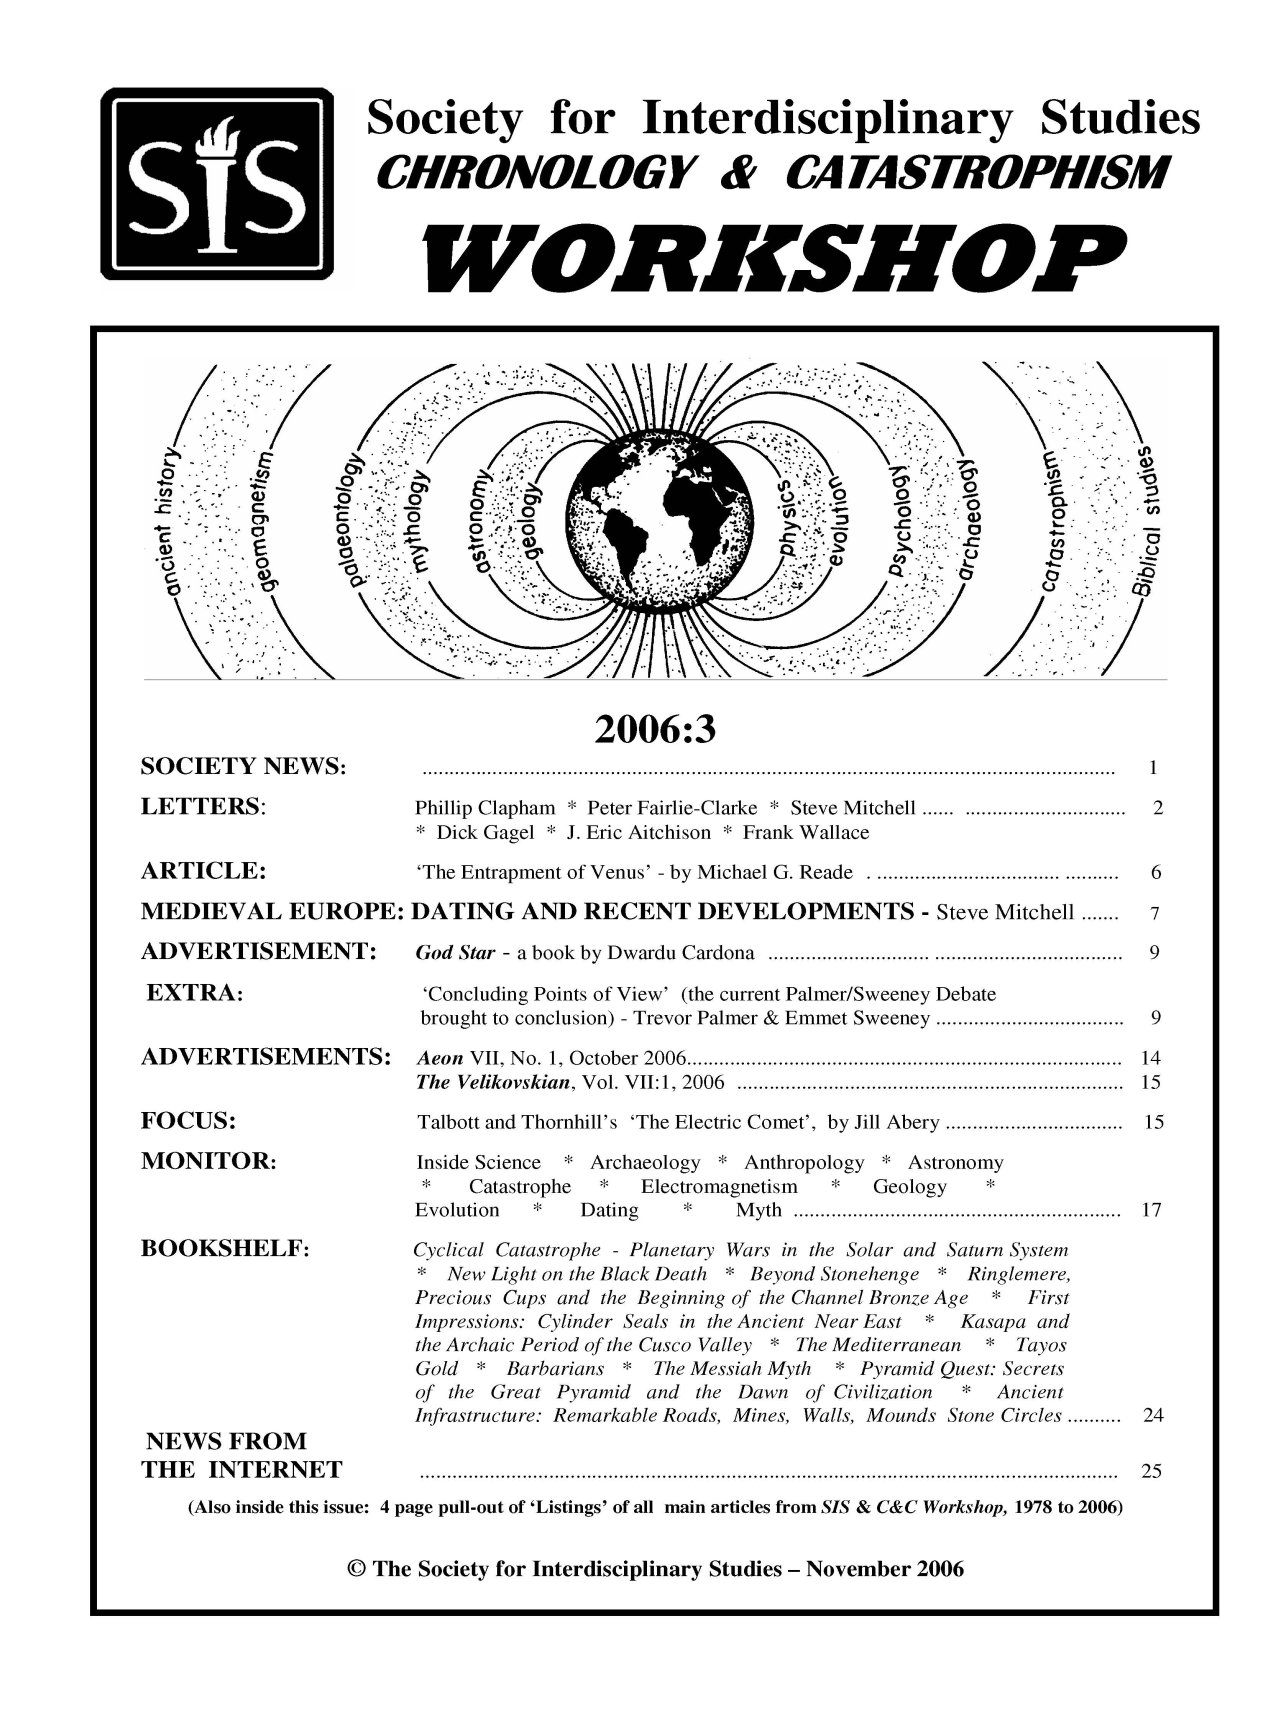 SIS Workshop 2006-3 cover